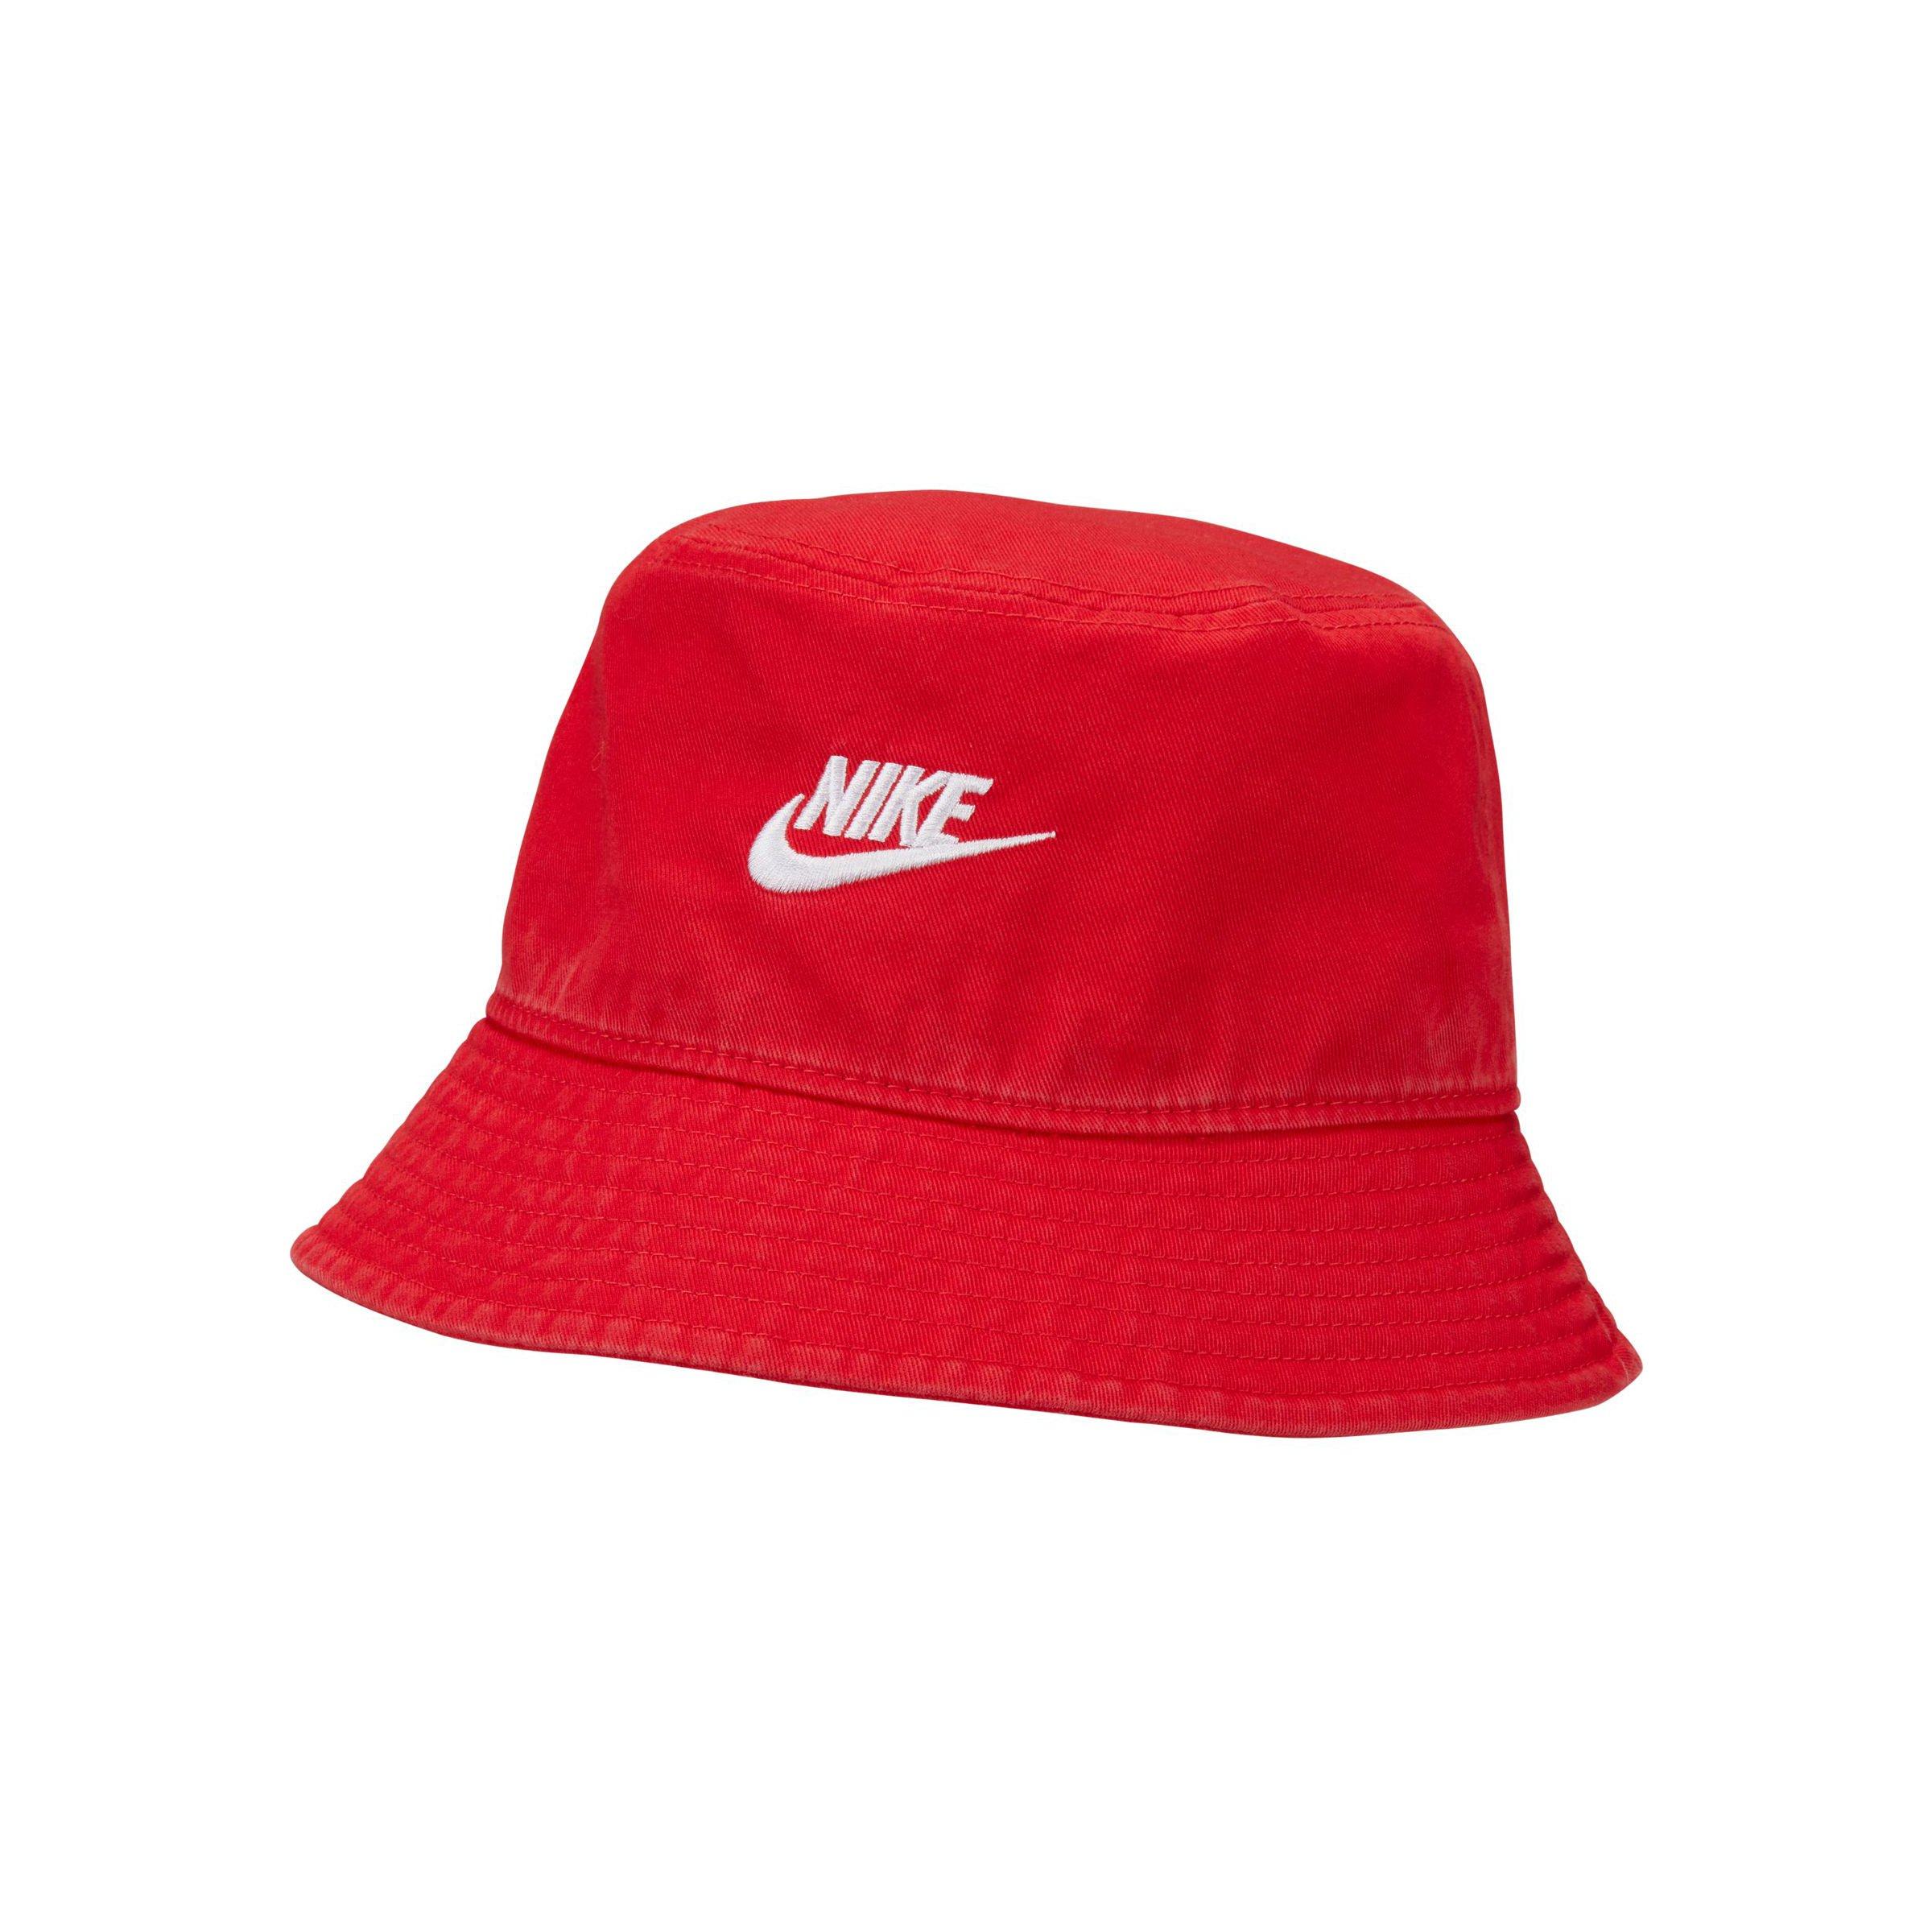 Nike Bucket Hat - Red